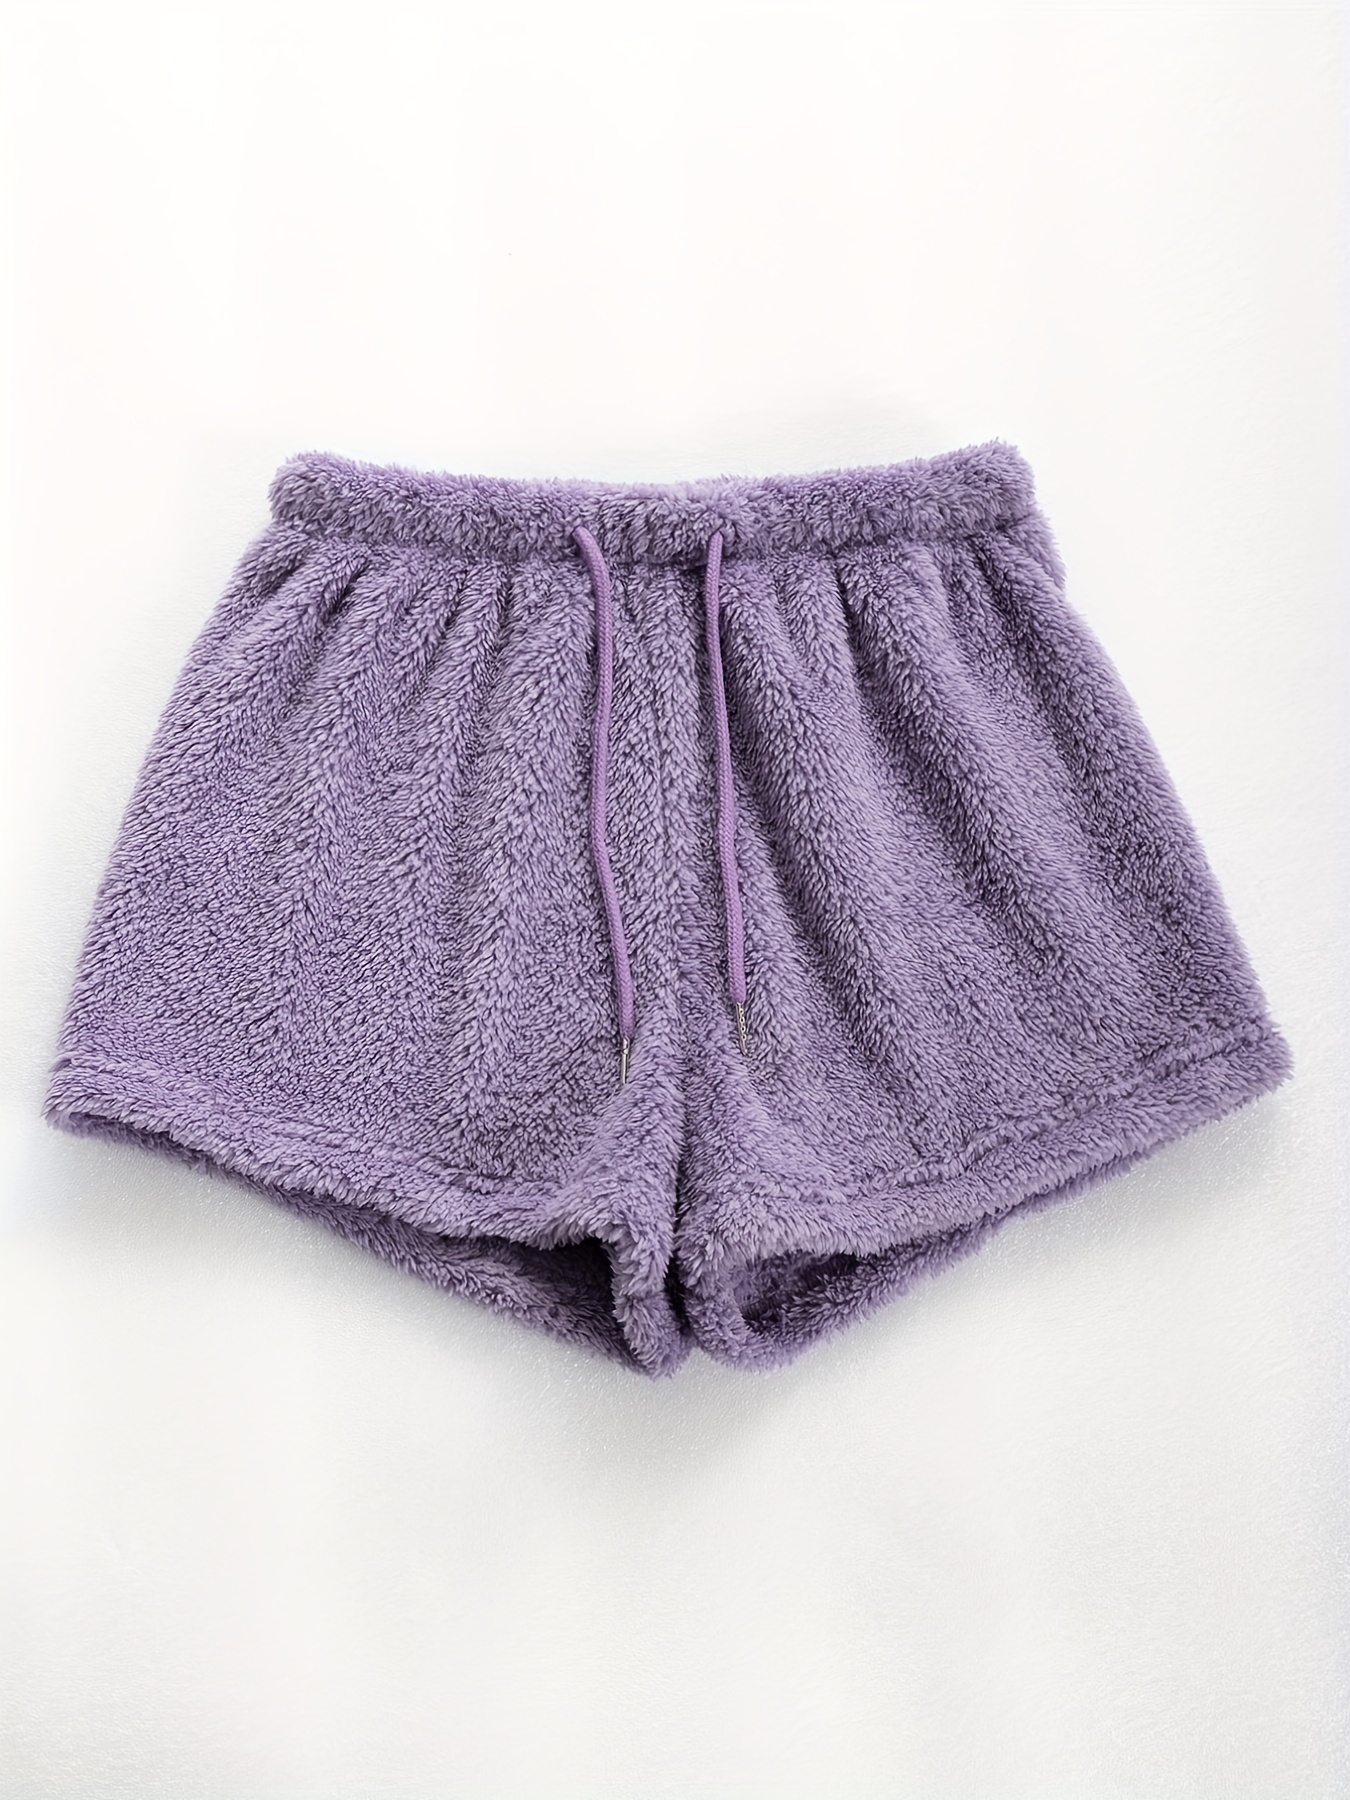 Solid Fuzzy Sleep Bottoms, Soft & Comfy Drawstring Lace Up Shorts, Women's  Sleepwear & Loungewear